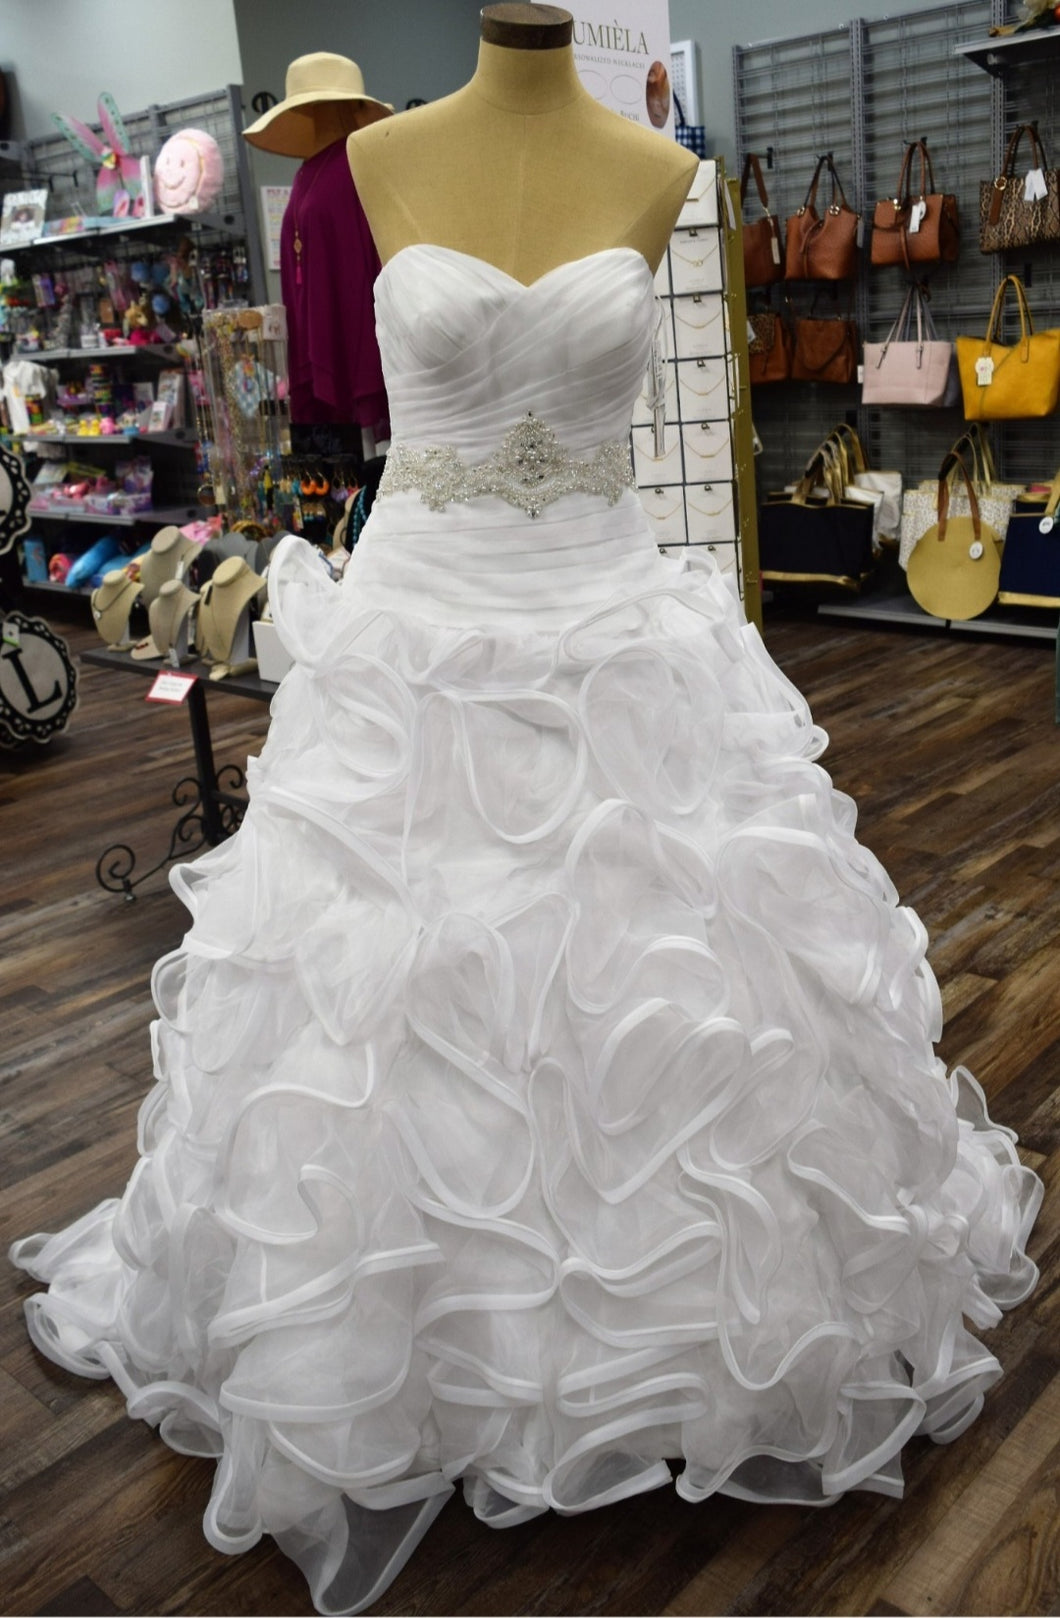 David's Bridal 'SWG492' wedding dress size-08 NEW